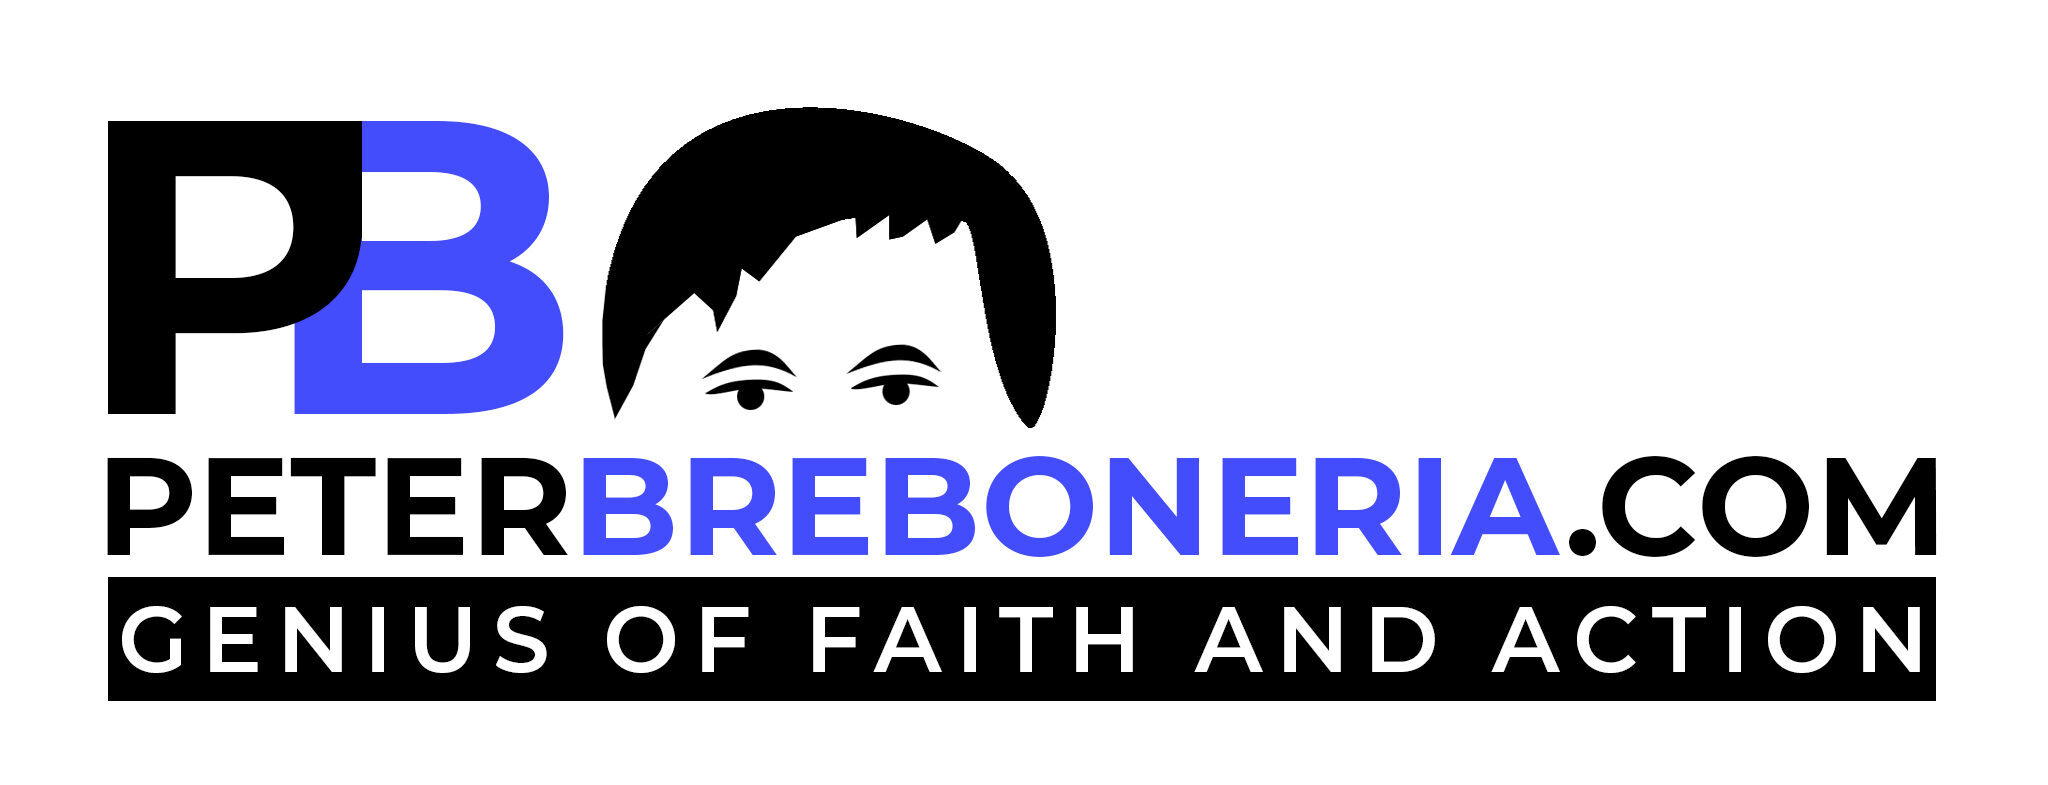 Peter Breboneria Official Website